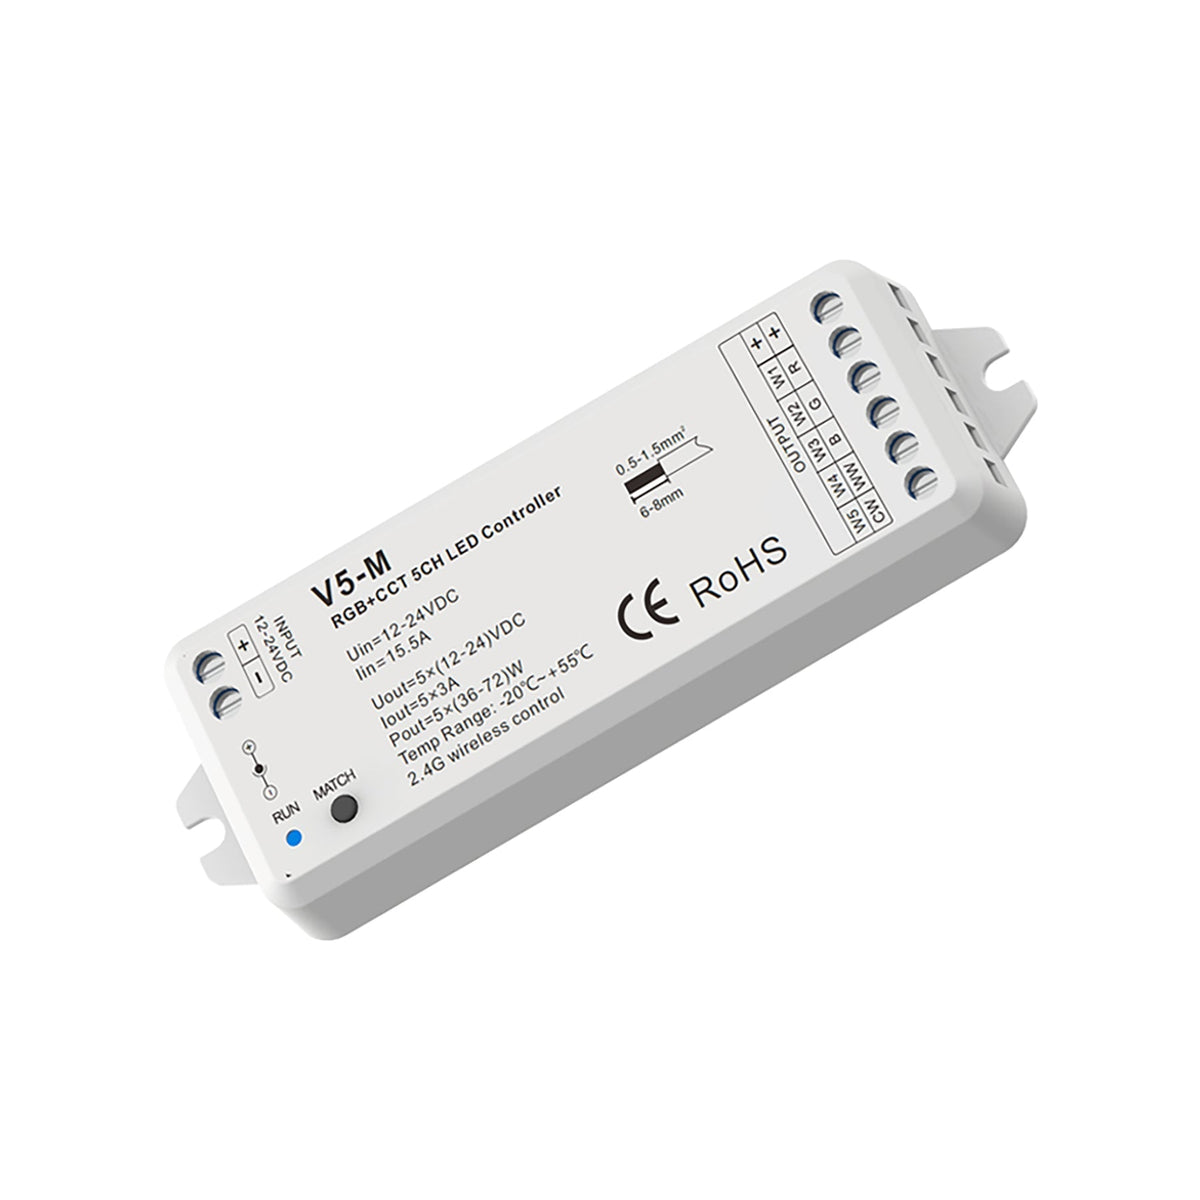 G.W.S. LED LED 12-24V DC RGB+CCT Controller V5-M + 1 Zone Remote Control RT5